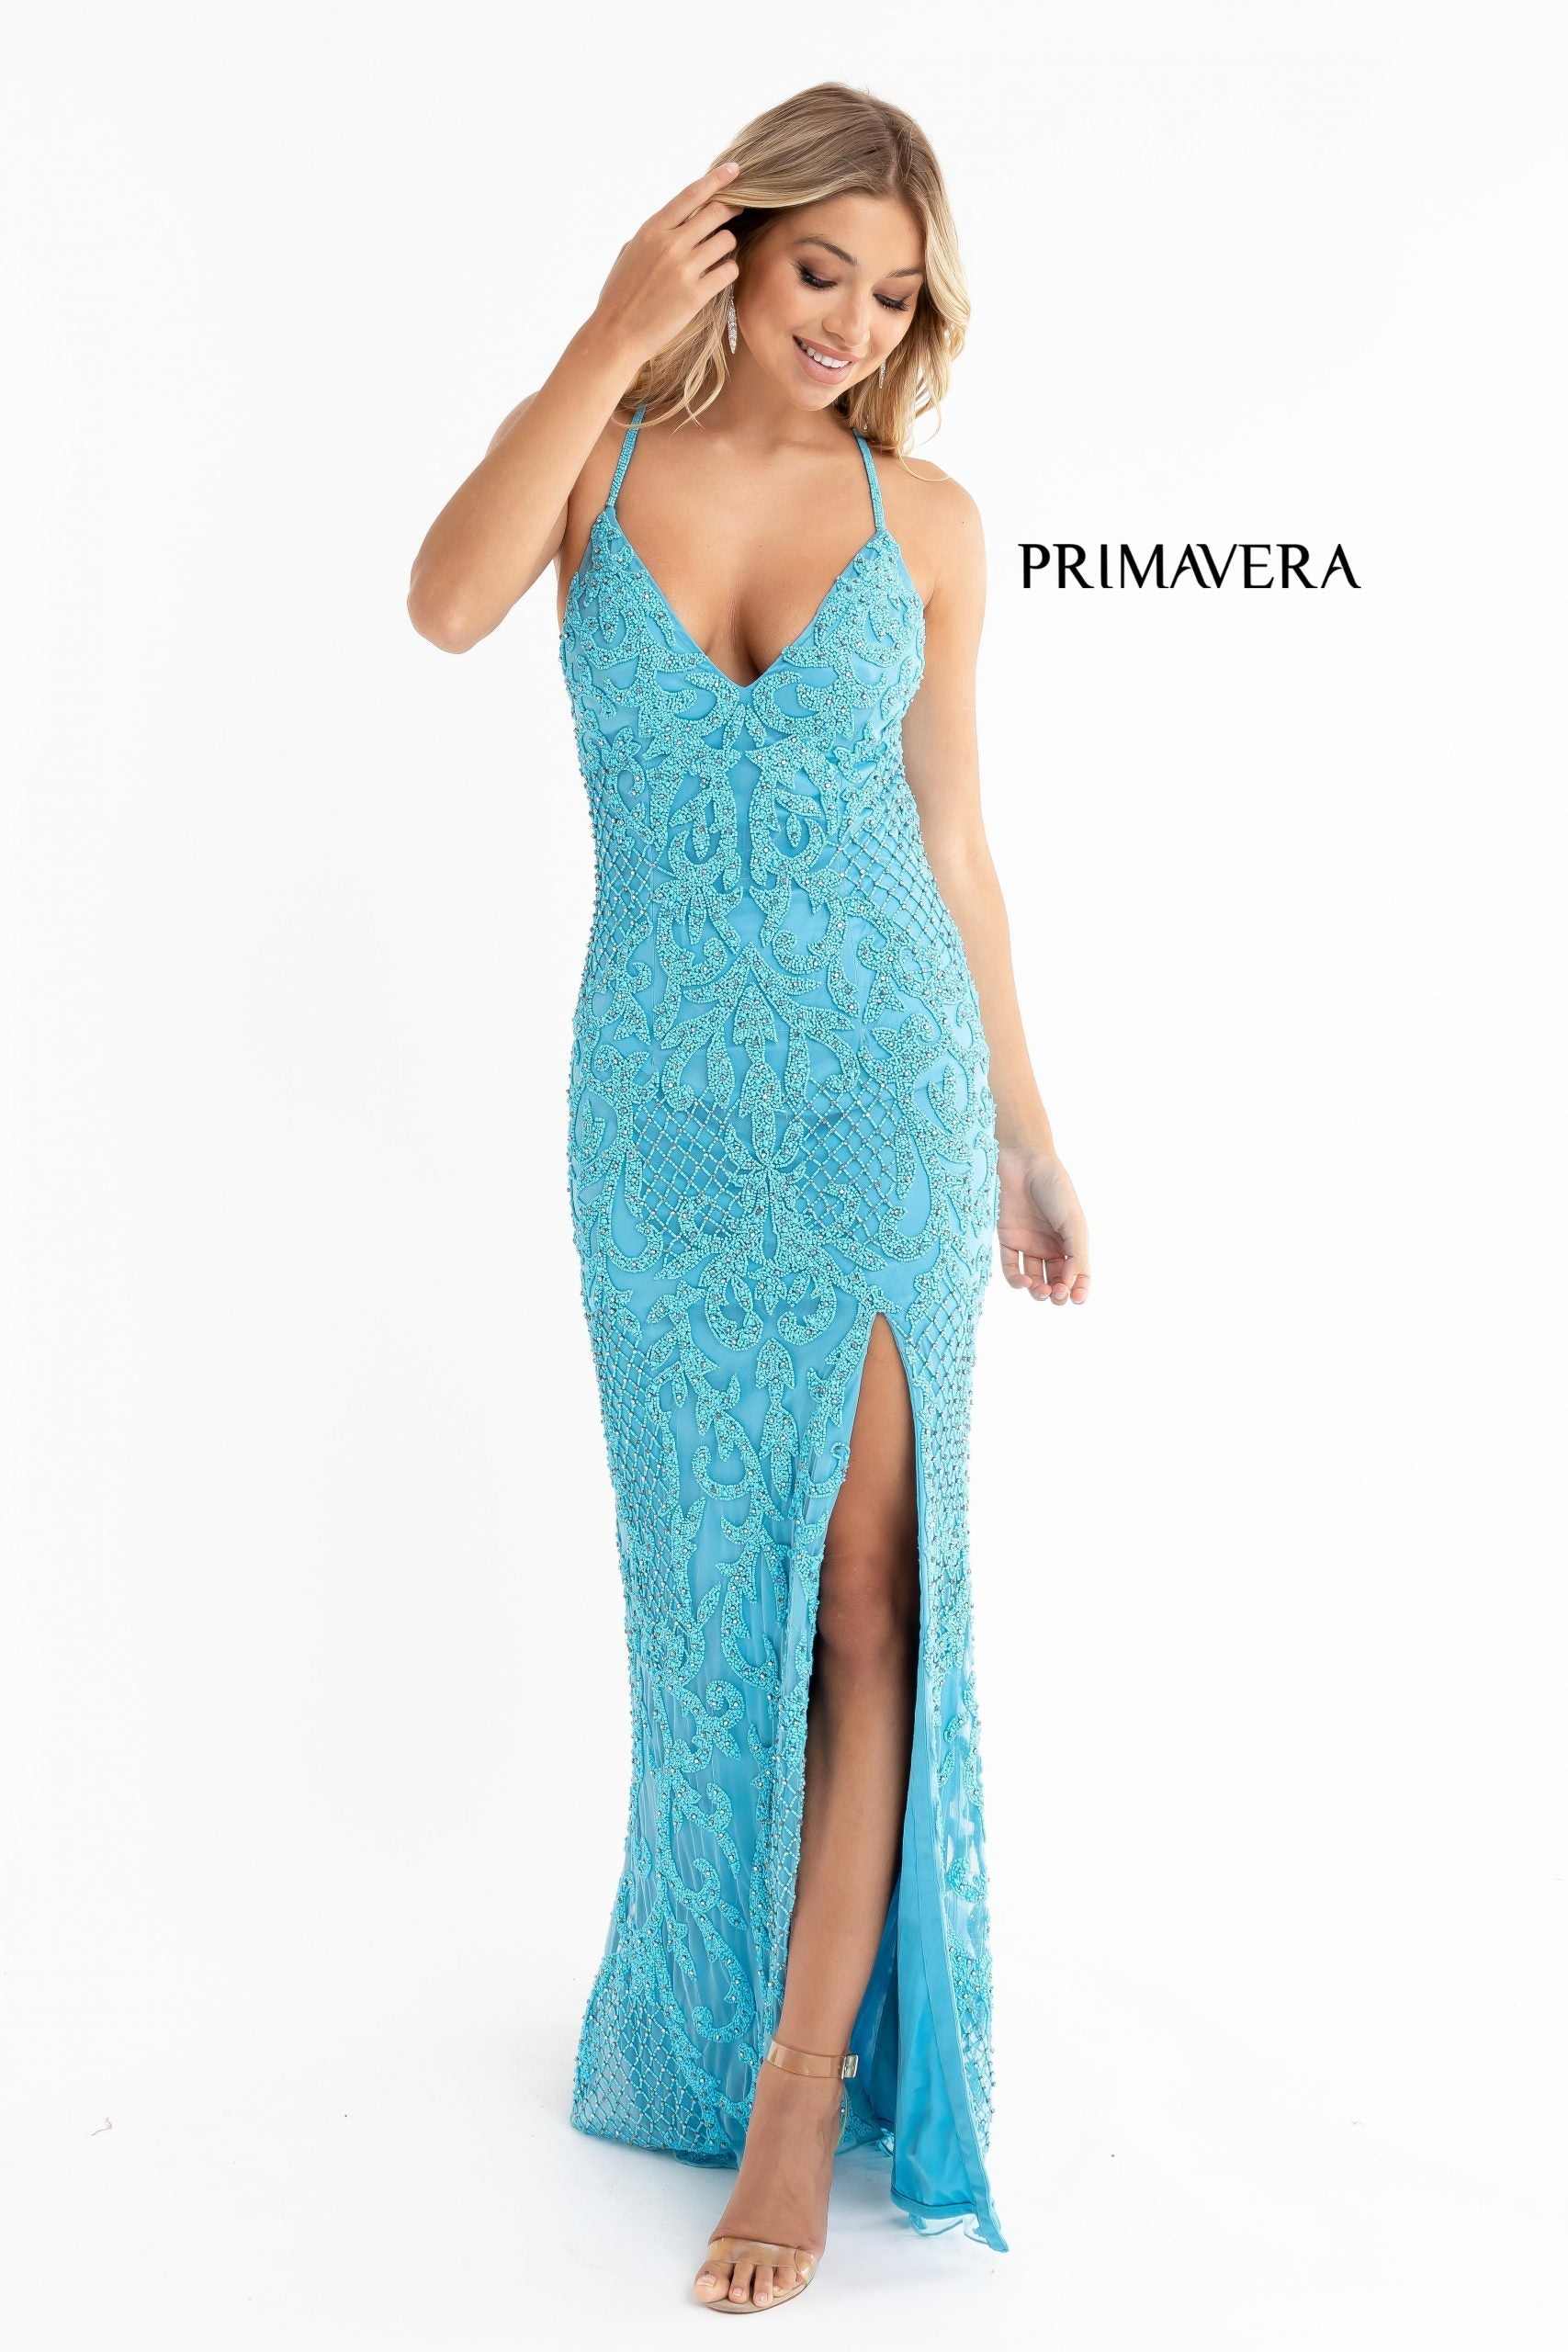 Primavera-Couture-3721-turquoise-prom-dress-1-front-long-beaded-v-neckline-slit-crisscross-back